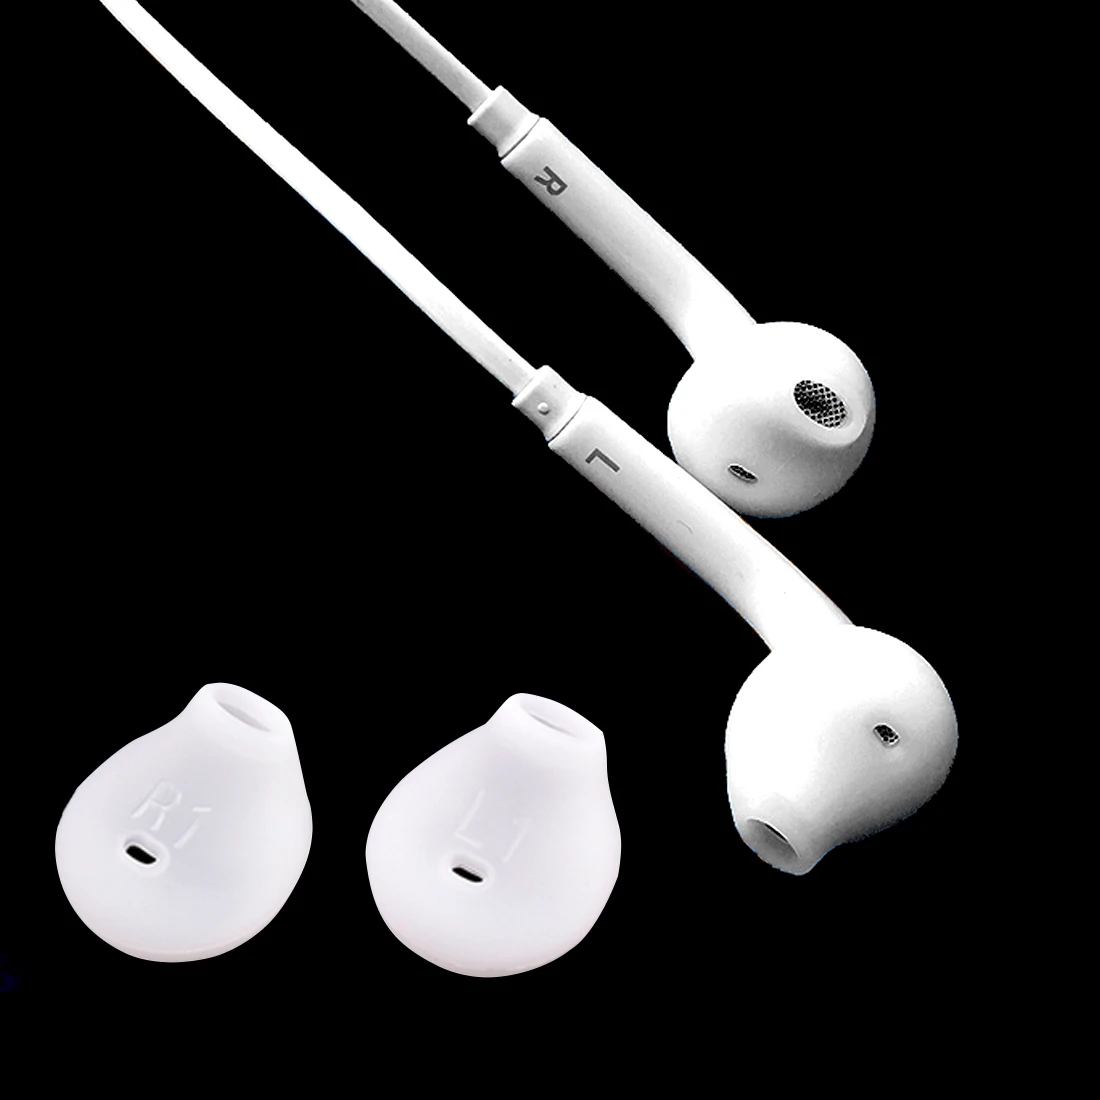 

10pcs/lot White Silicone Earphone Earpads Ear Caps For Samsung S6 S7 edge G9250 G9200 Gel Ear In-Ear Tips Eartips Ear Buds Cups